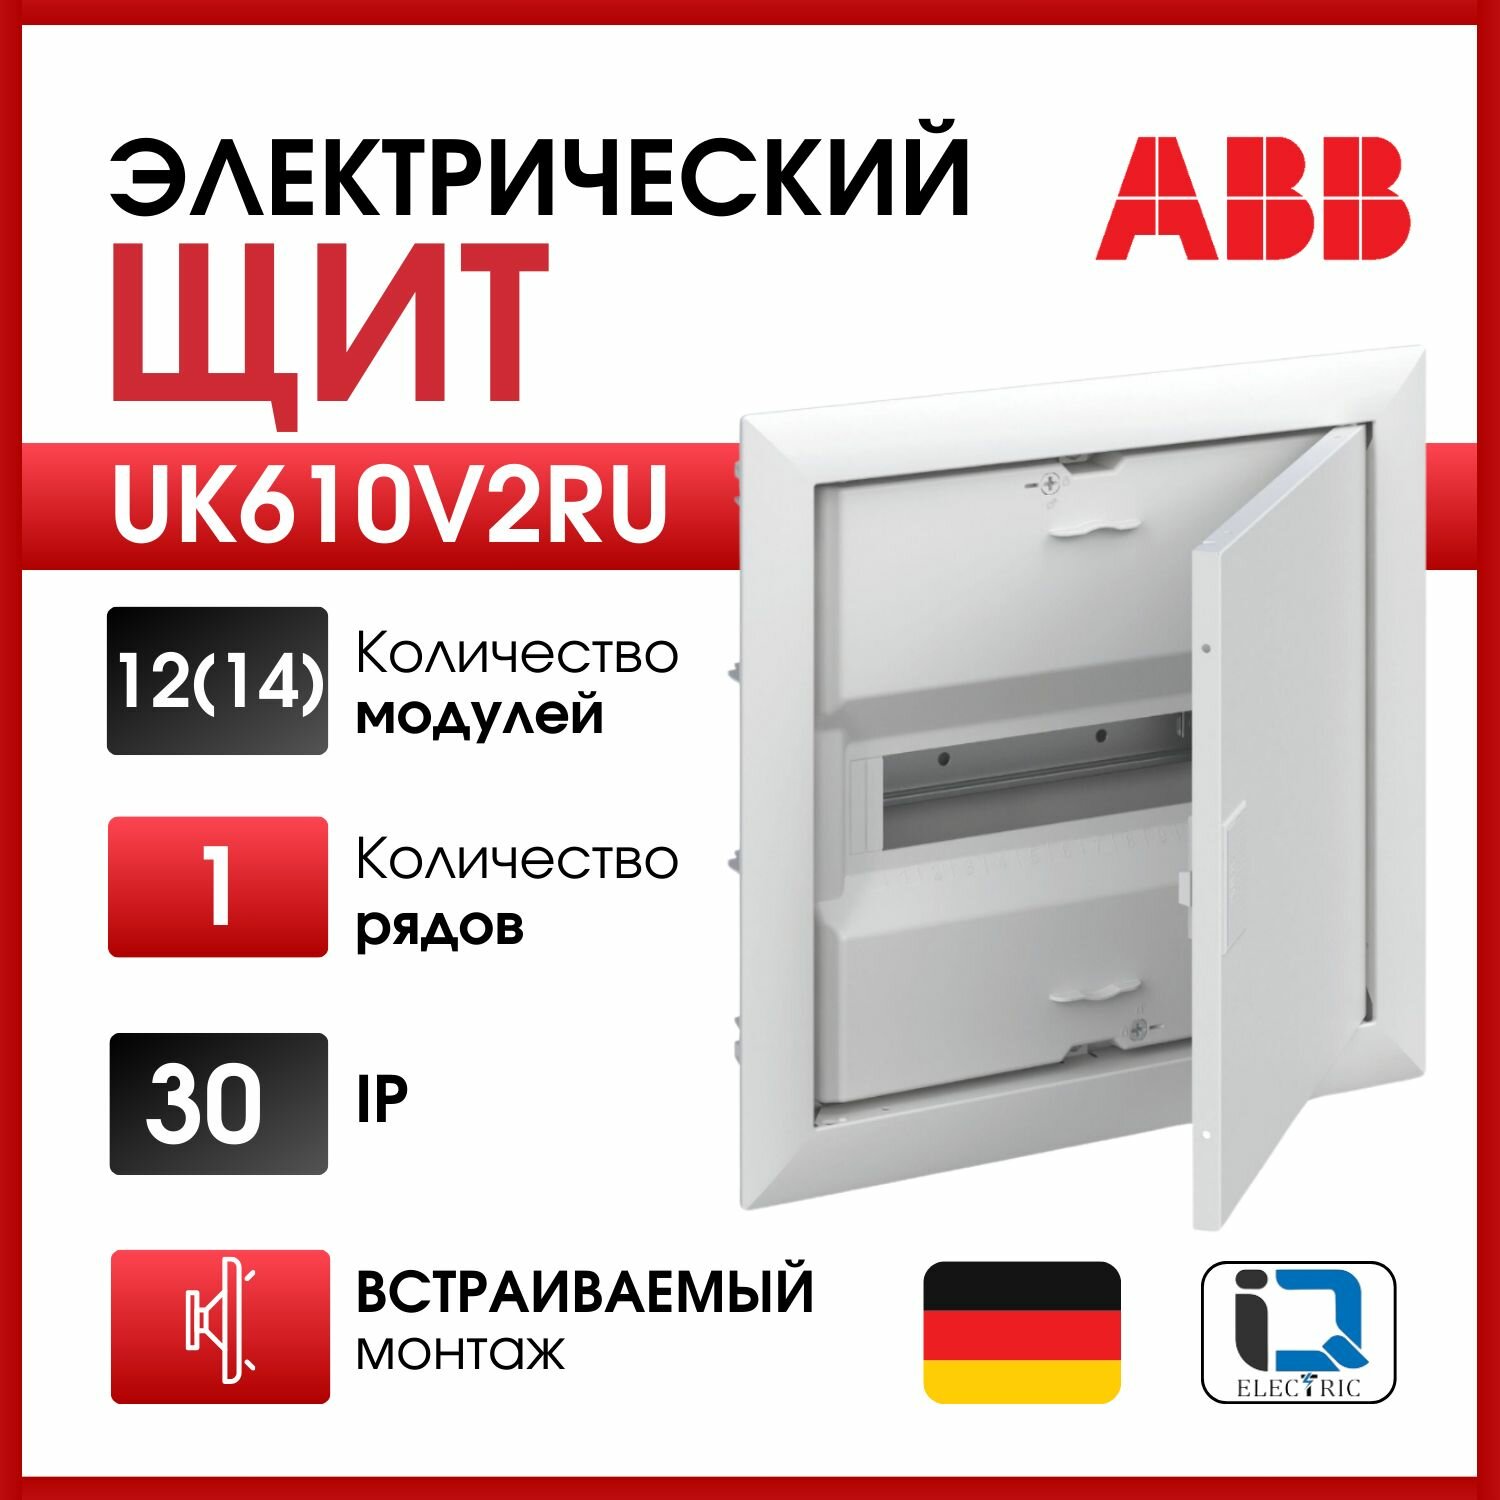 Шкаф в нишу ABB UK610V2RU 12 (14) мод (с винтовыми клеммами N/PE) 2CPX077855R9999, белый